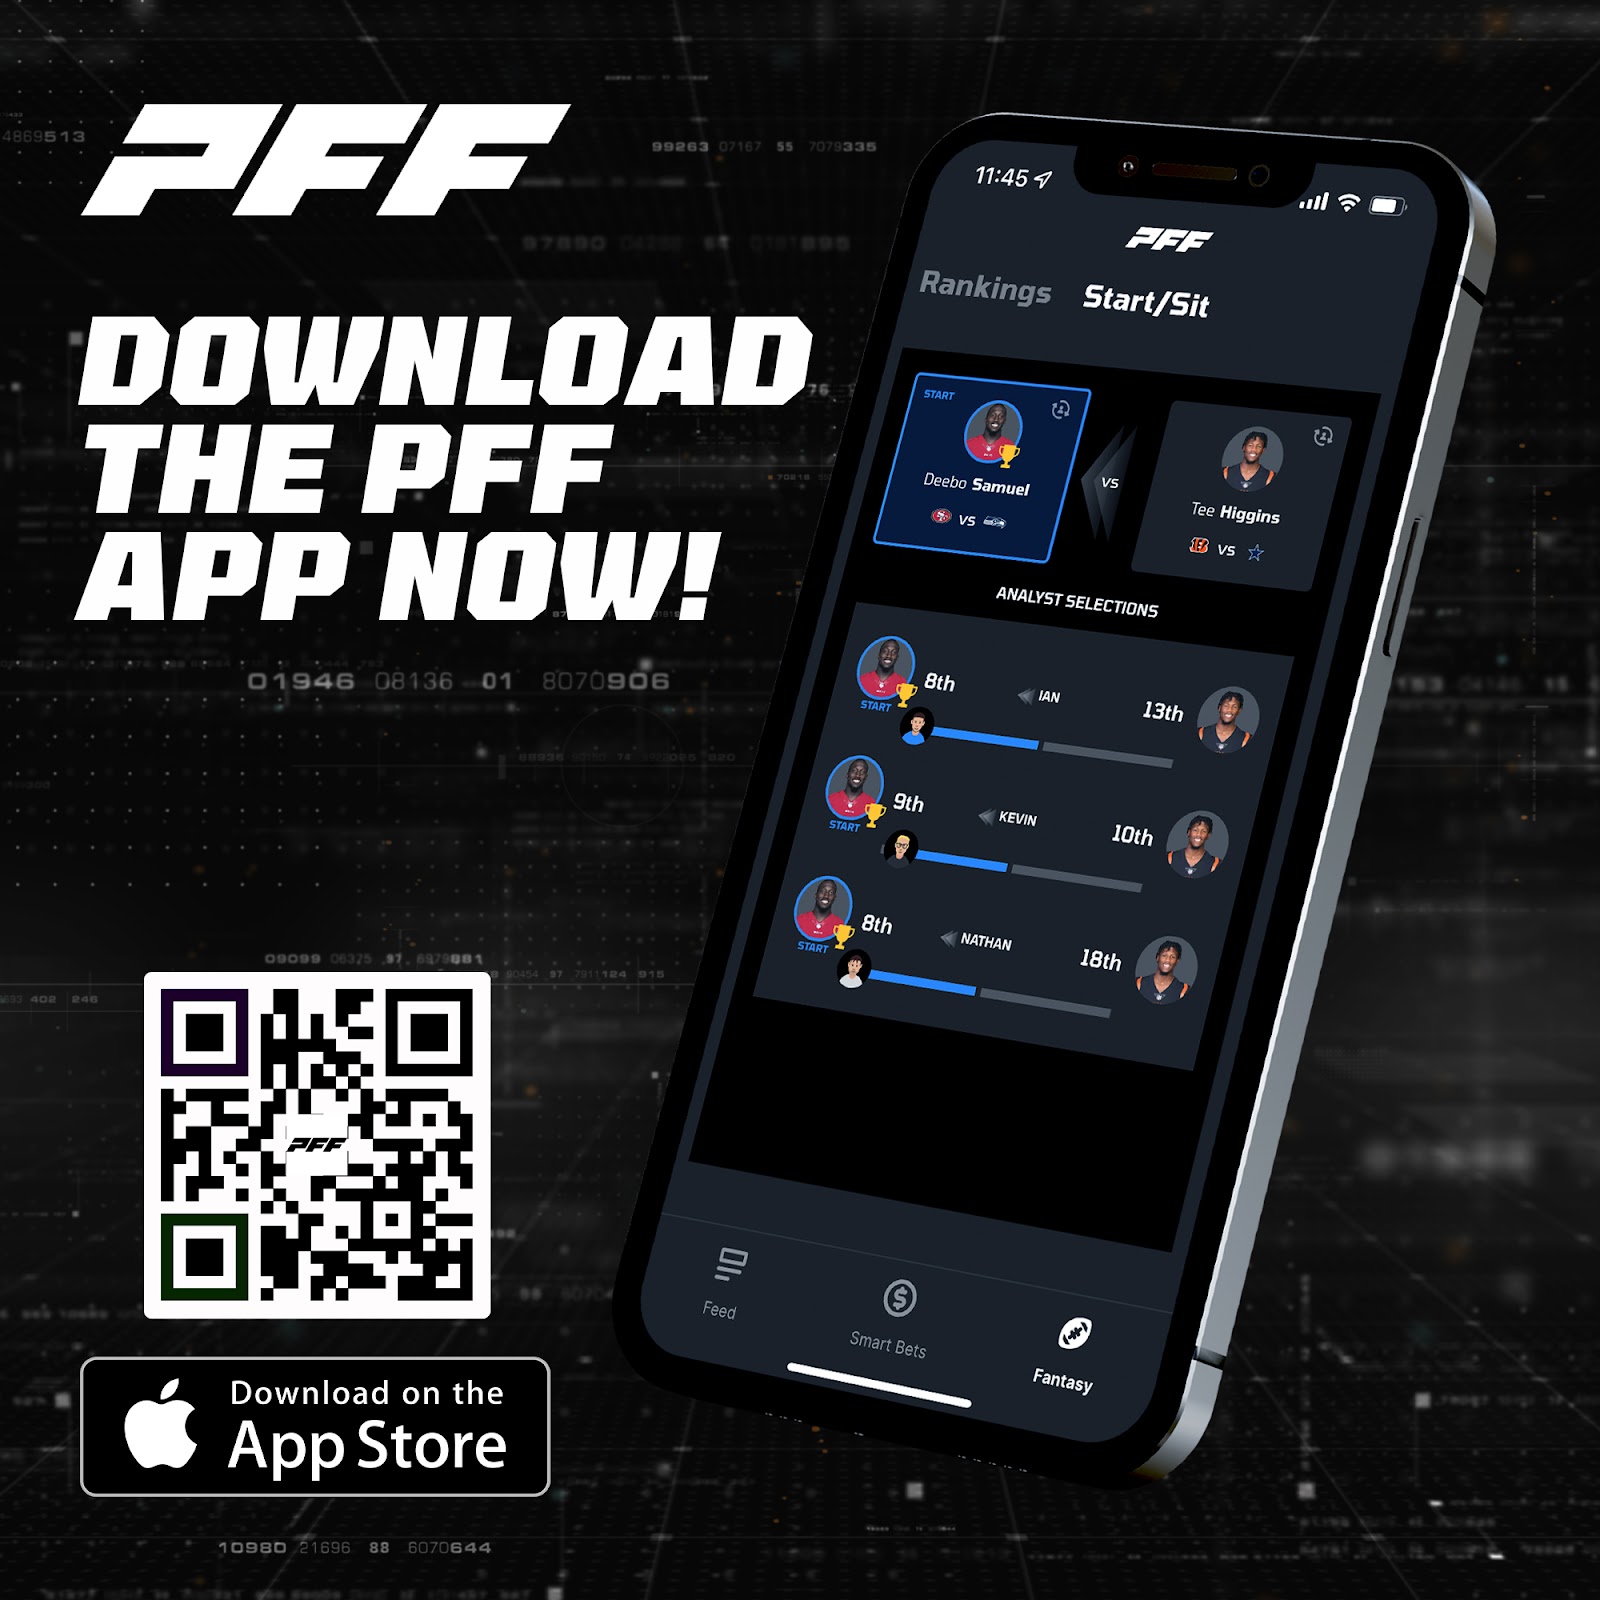 NFL Fantasy Football on the App Store